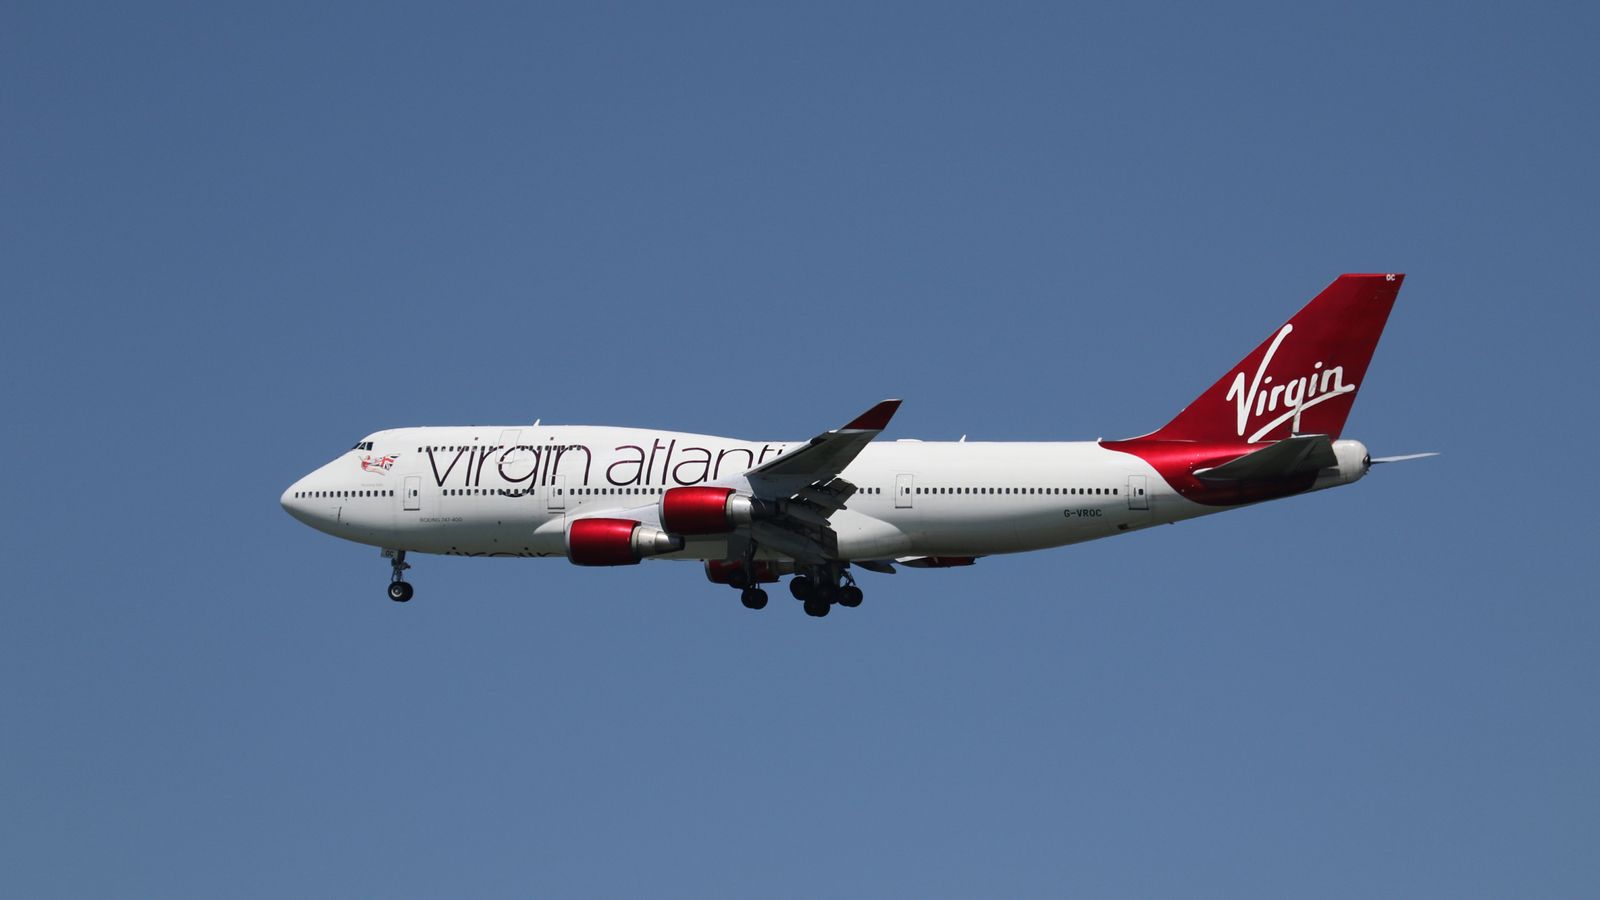 Richard Branson and Delta inject £400m to bolster Virgin Atlantic's finances